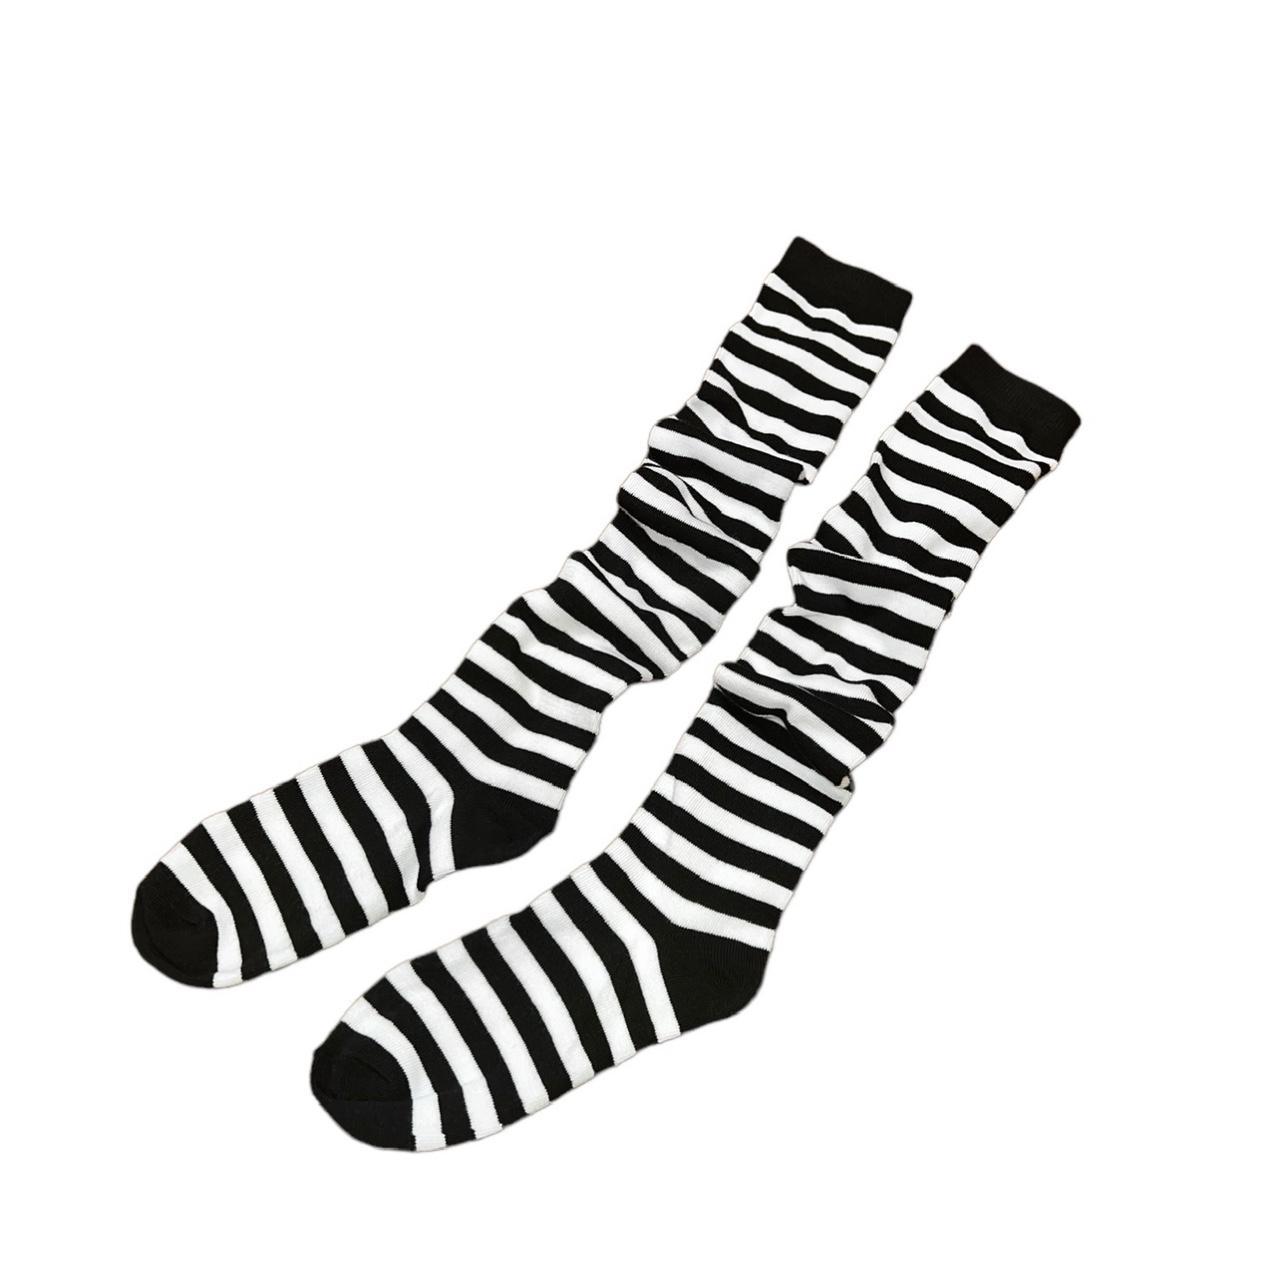 Black and white striped socks - Depop